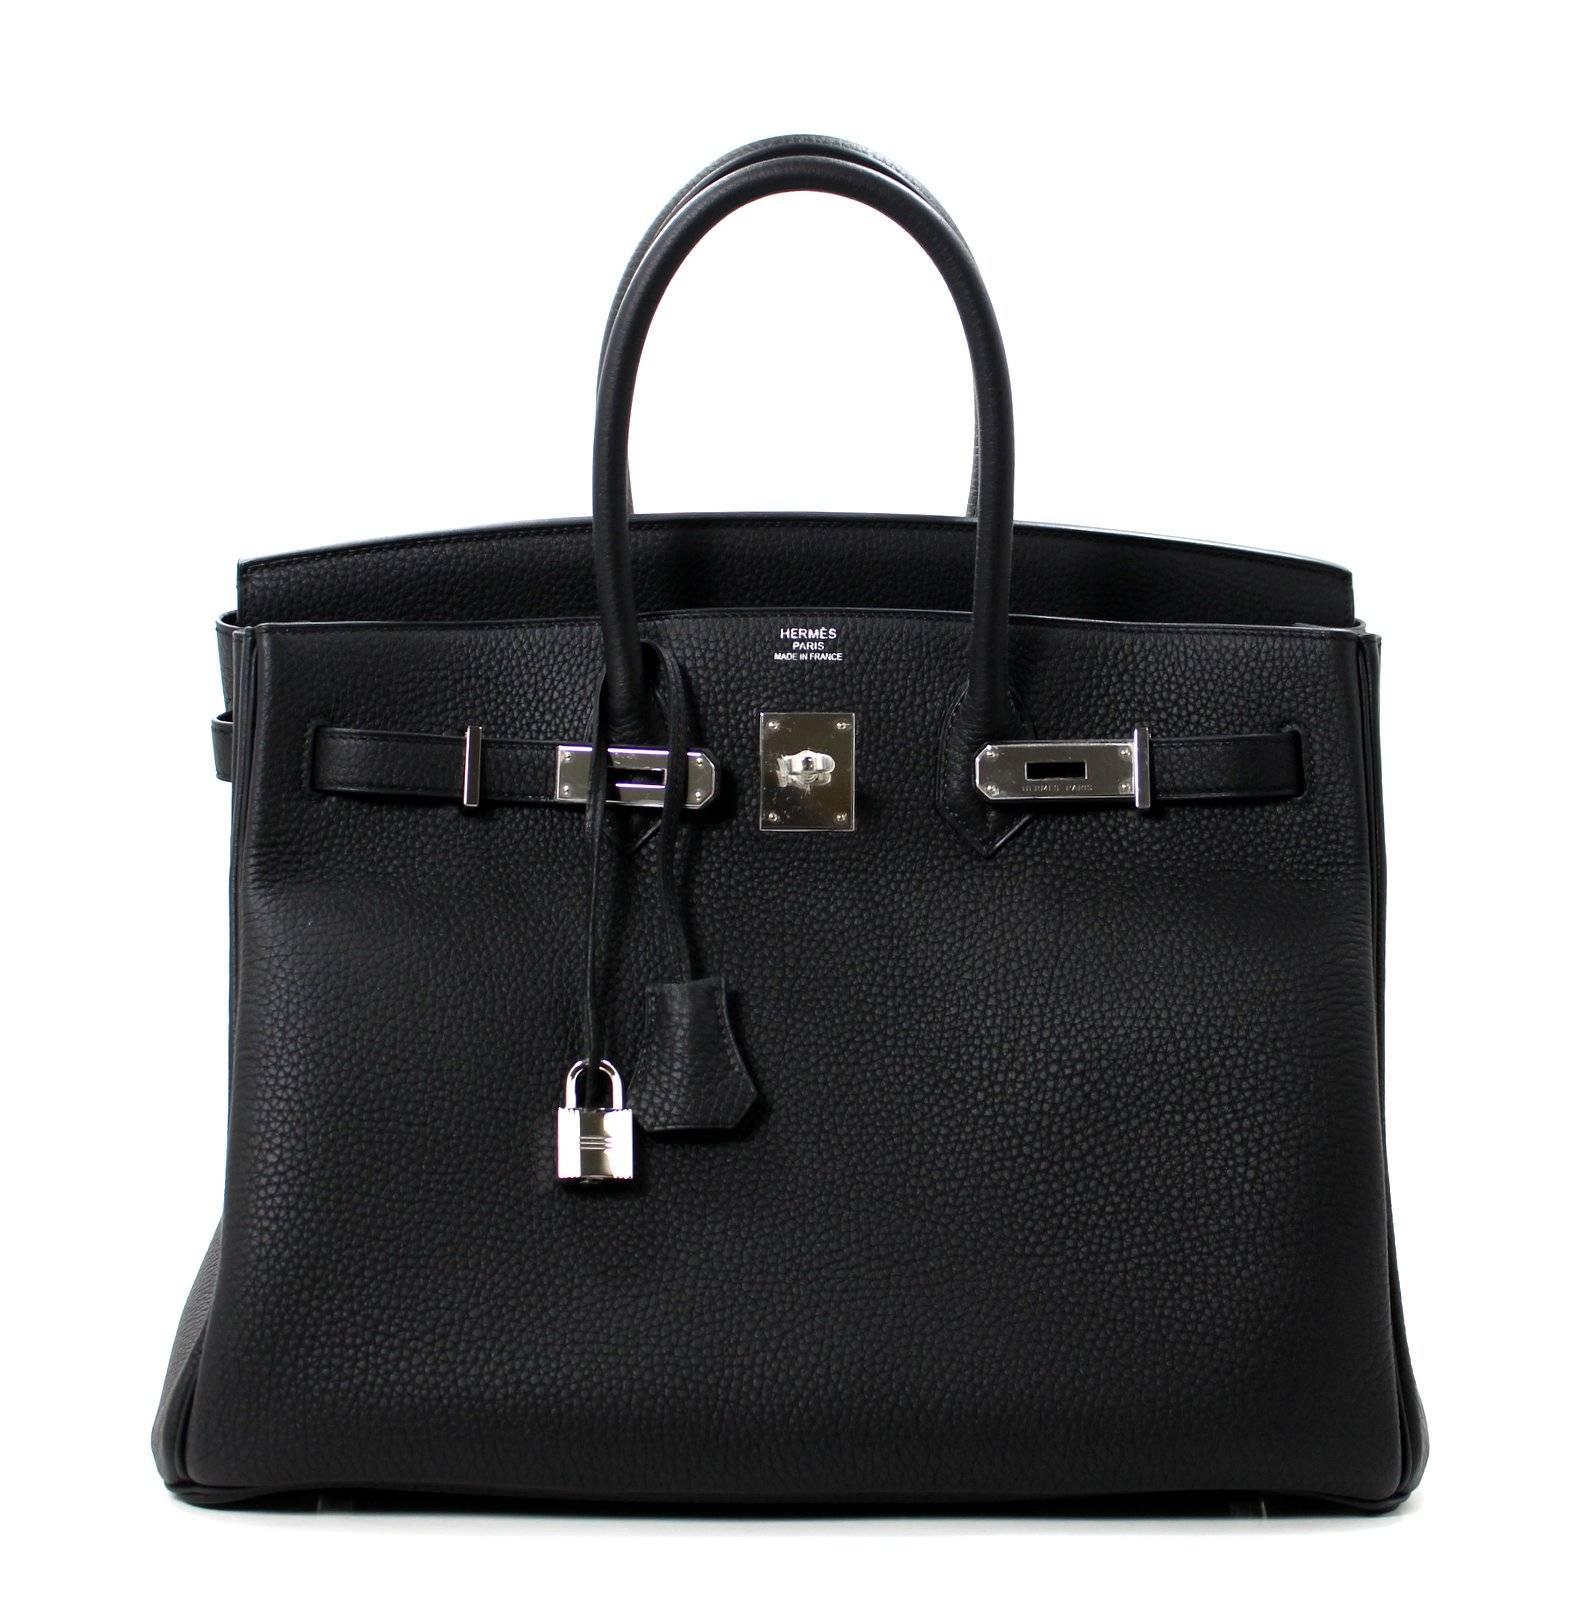 Hermès Black Togo Leather Birkin Bag- PHW, 35 cm size 3